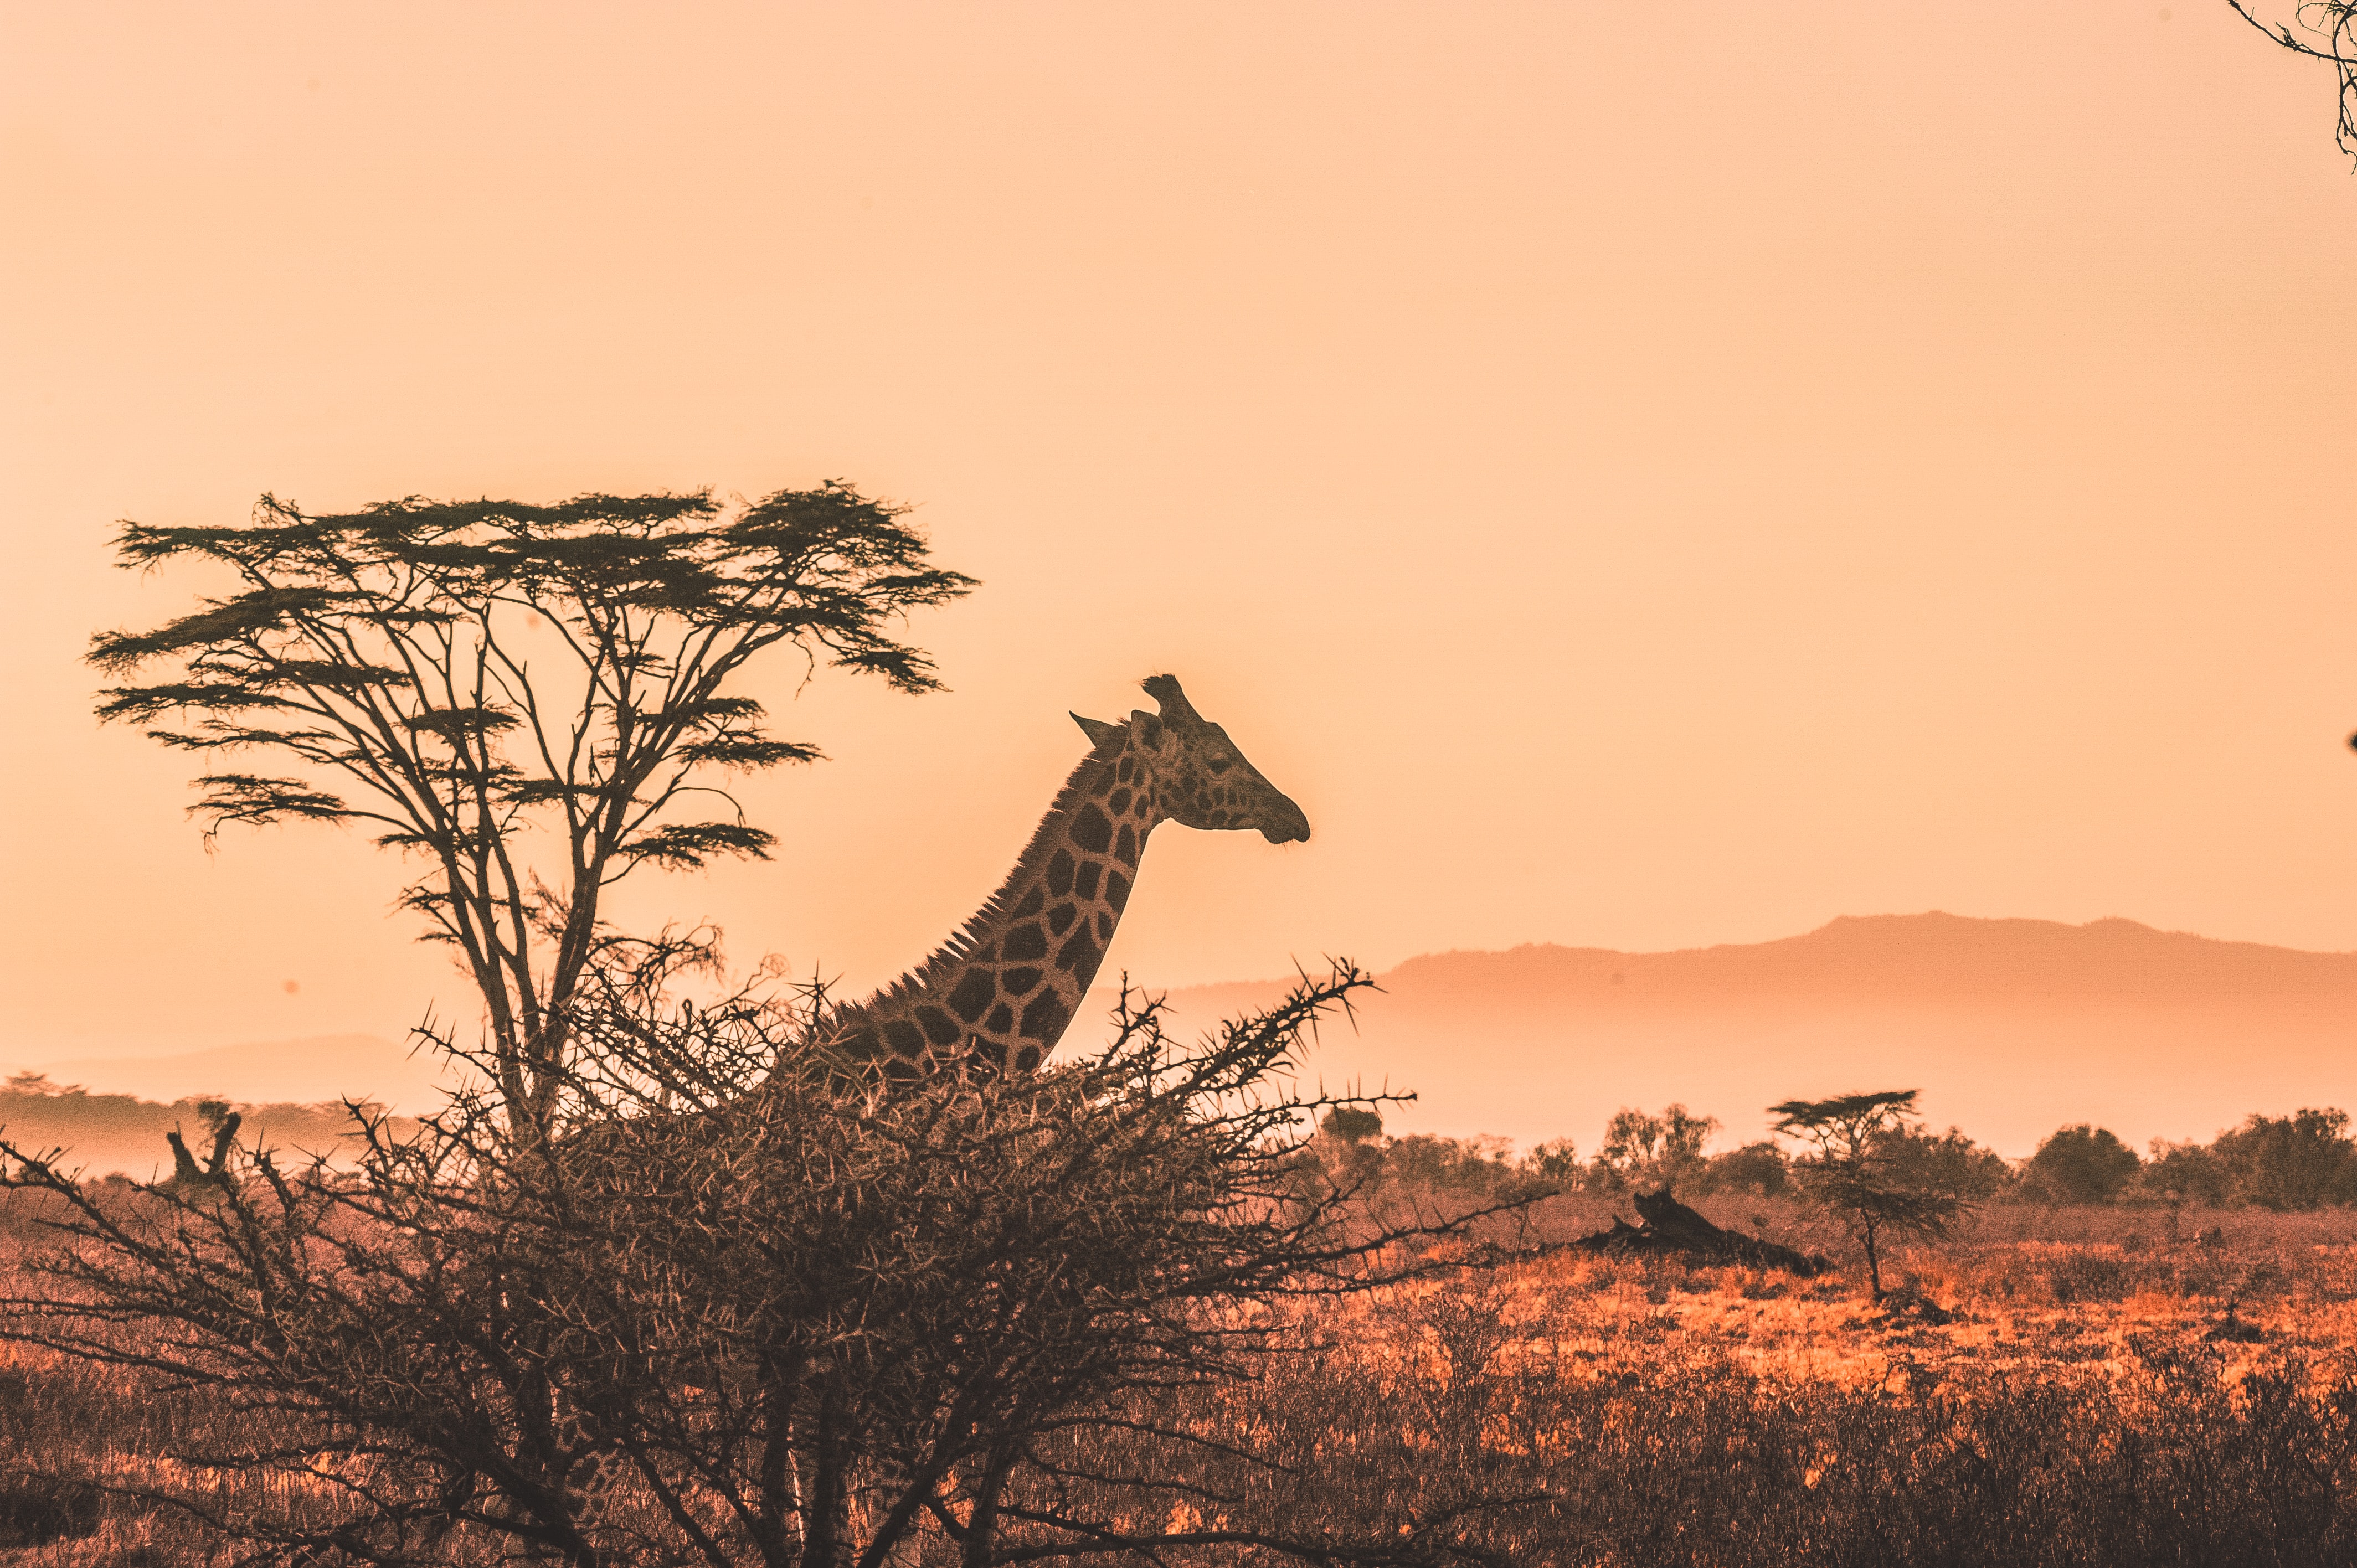 Photograph of a Giraffe in the wild